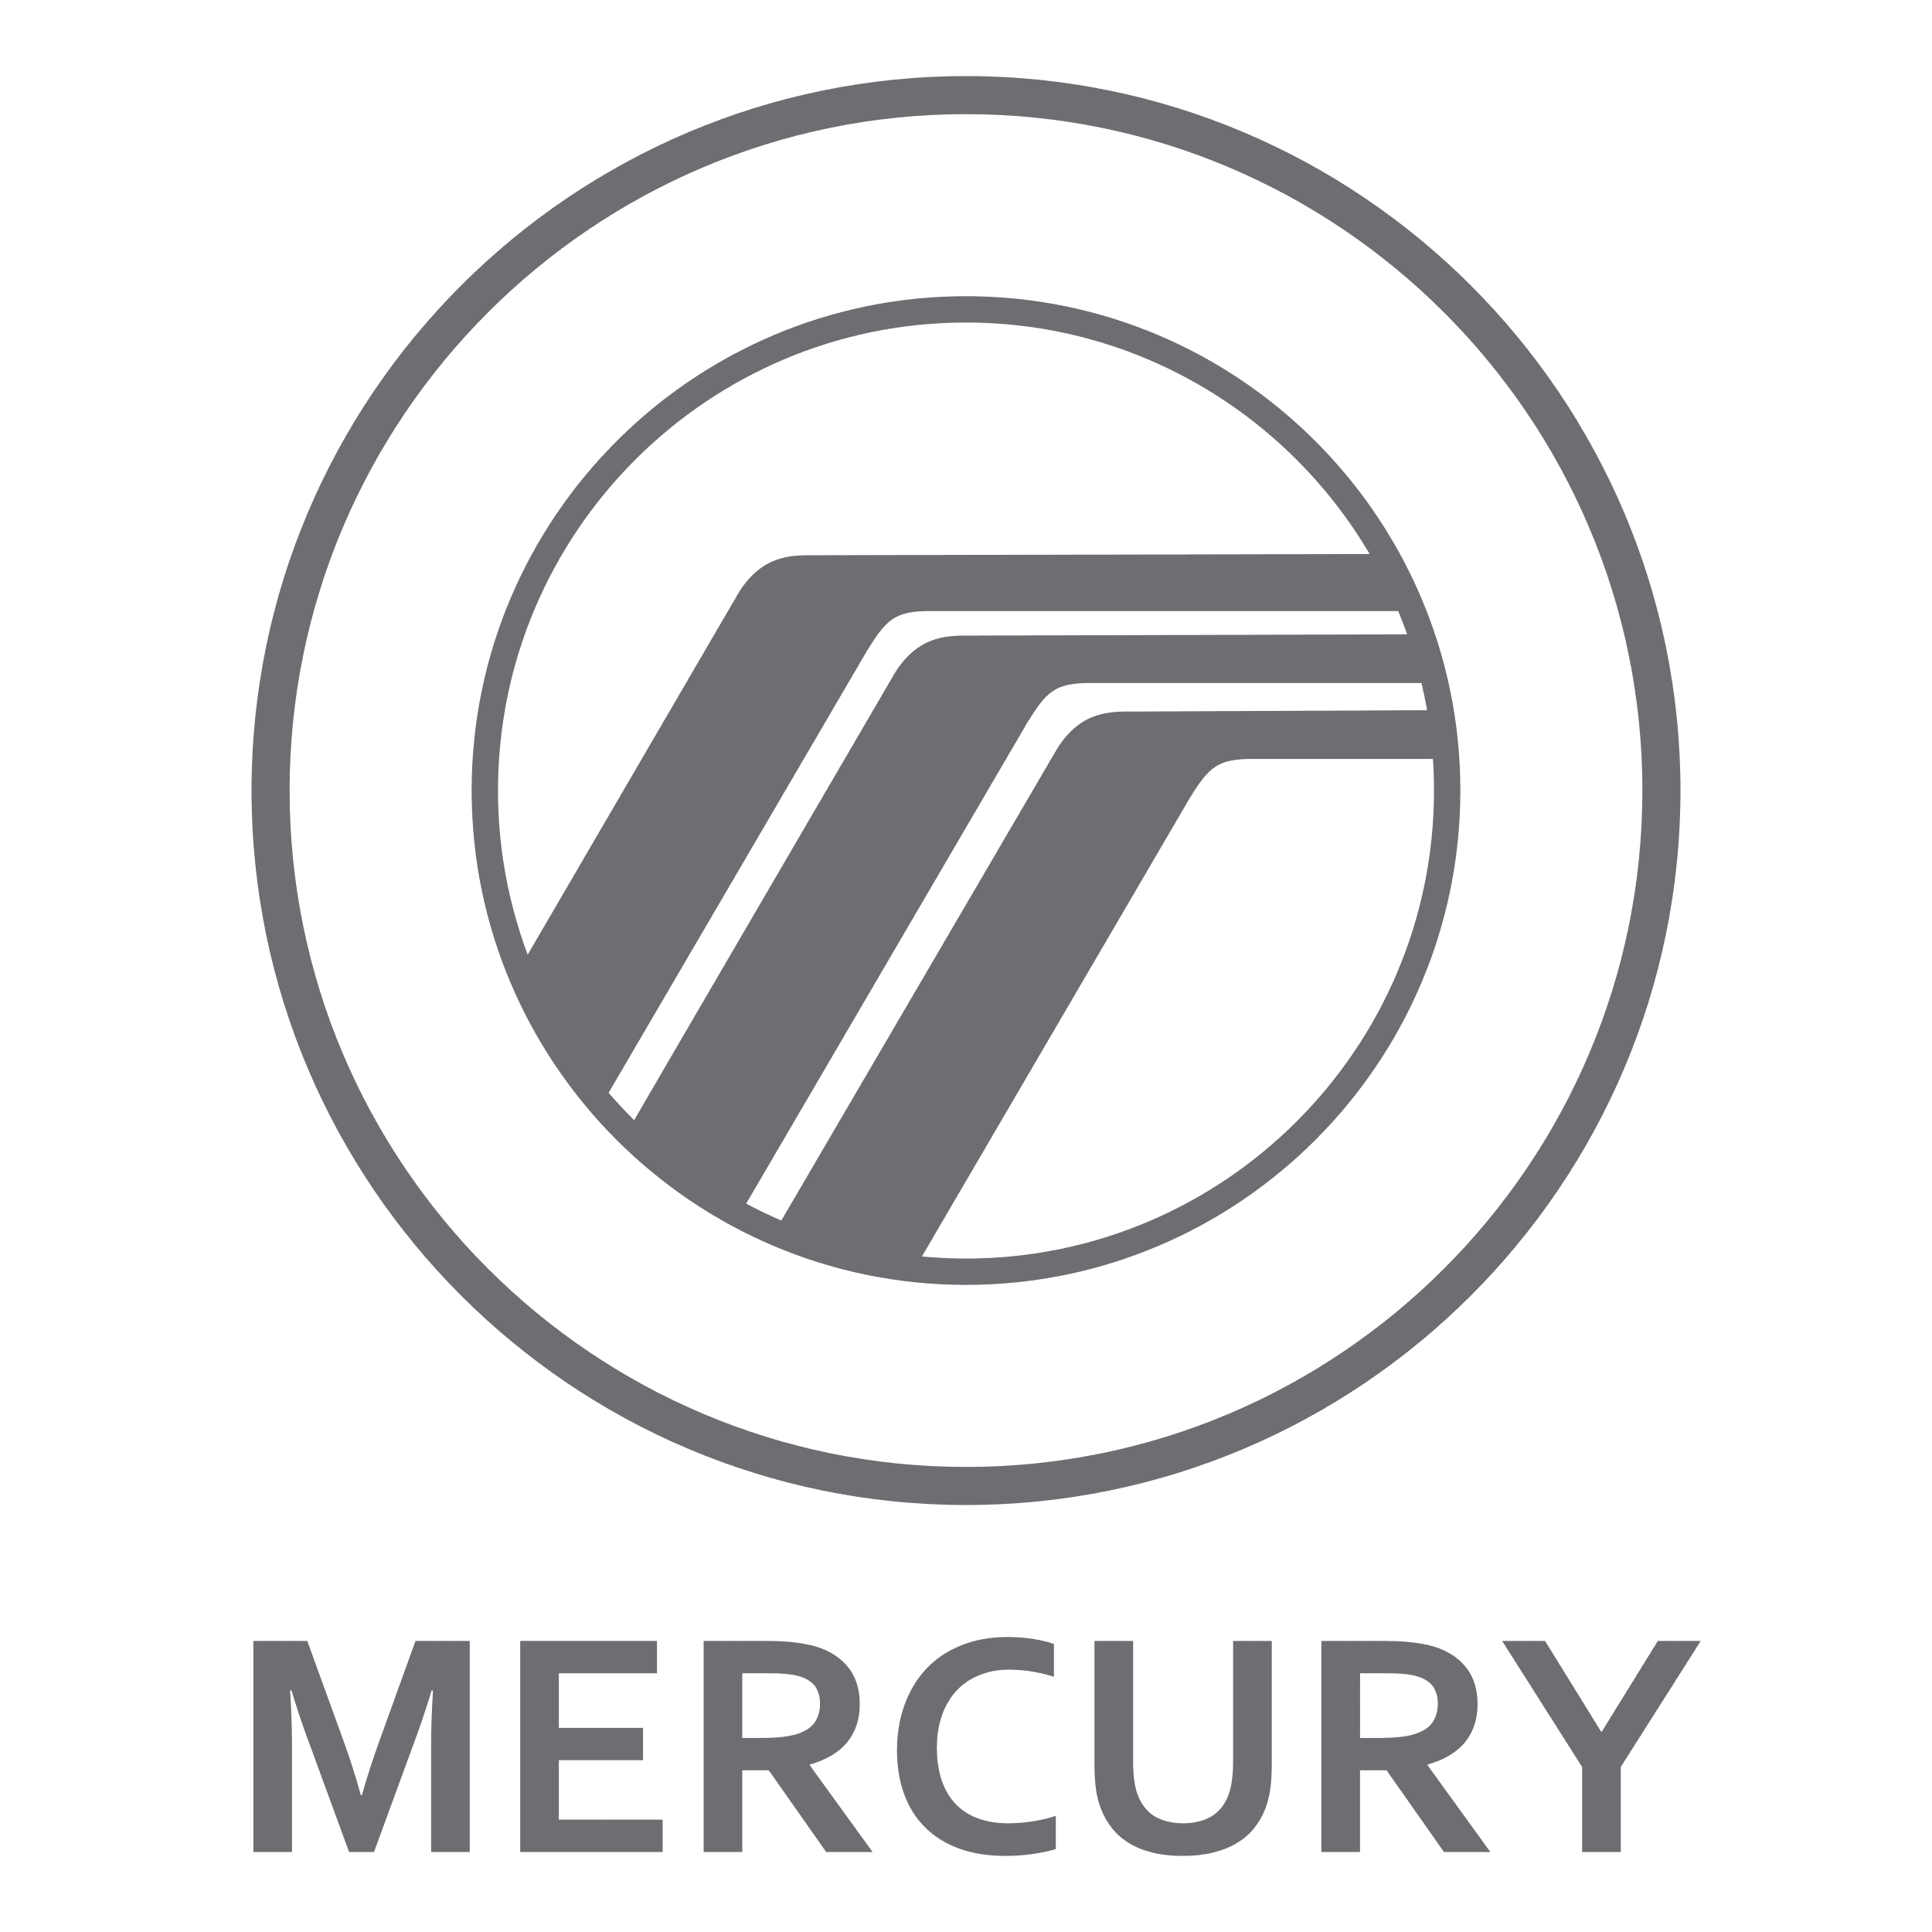 Mercury window sticker